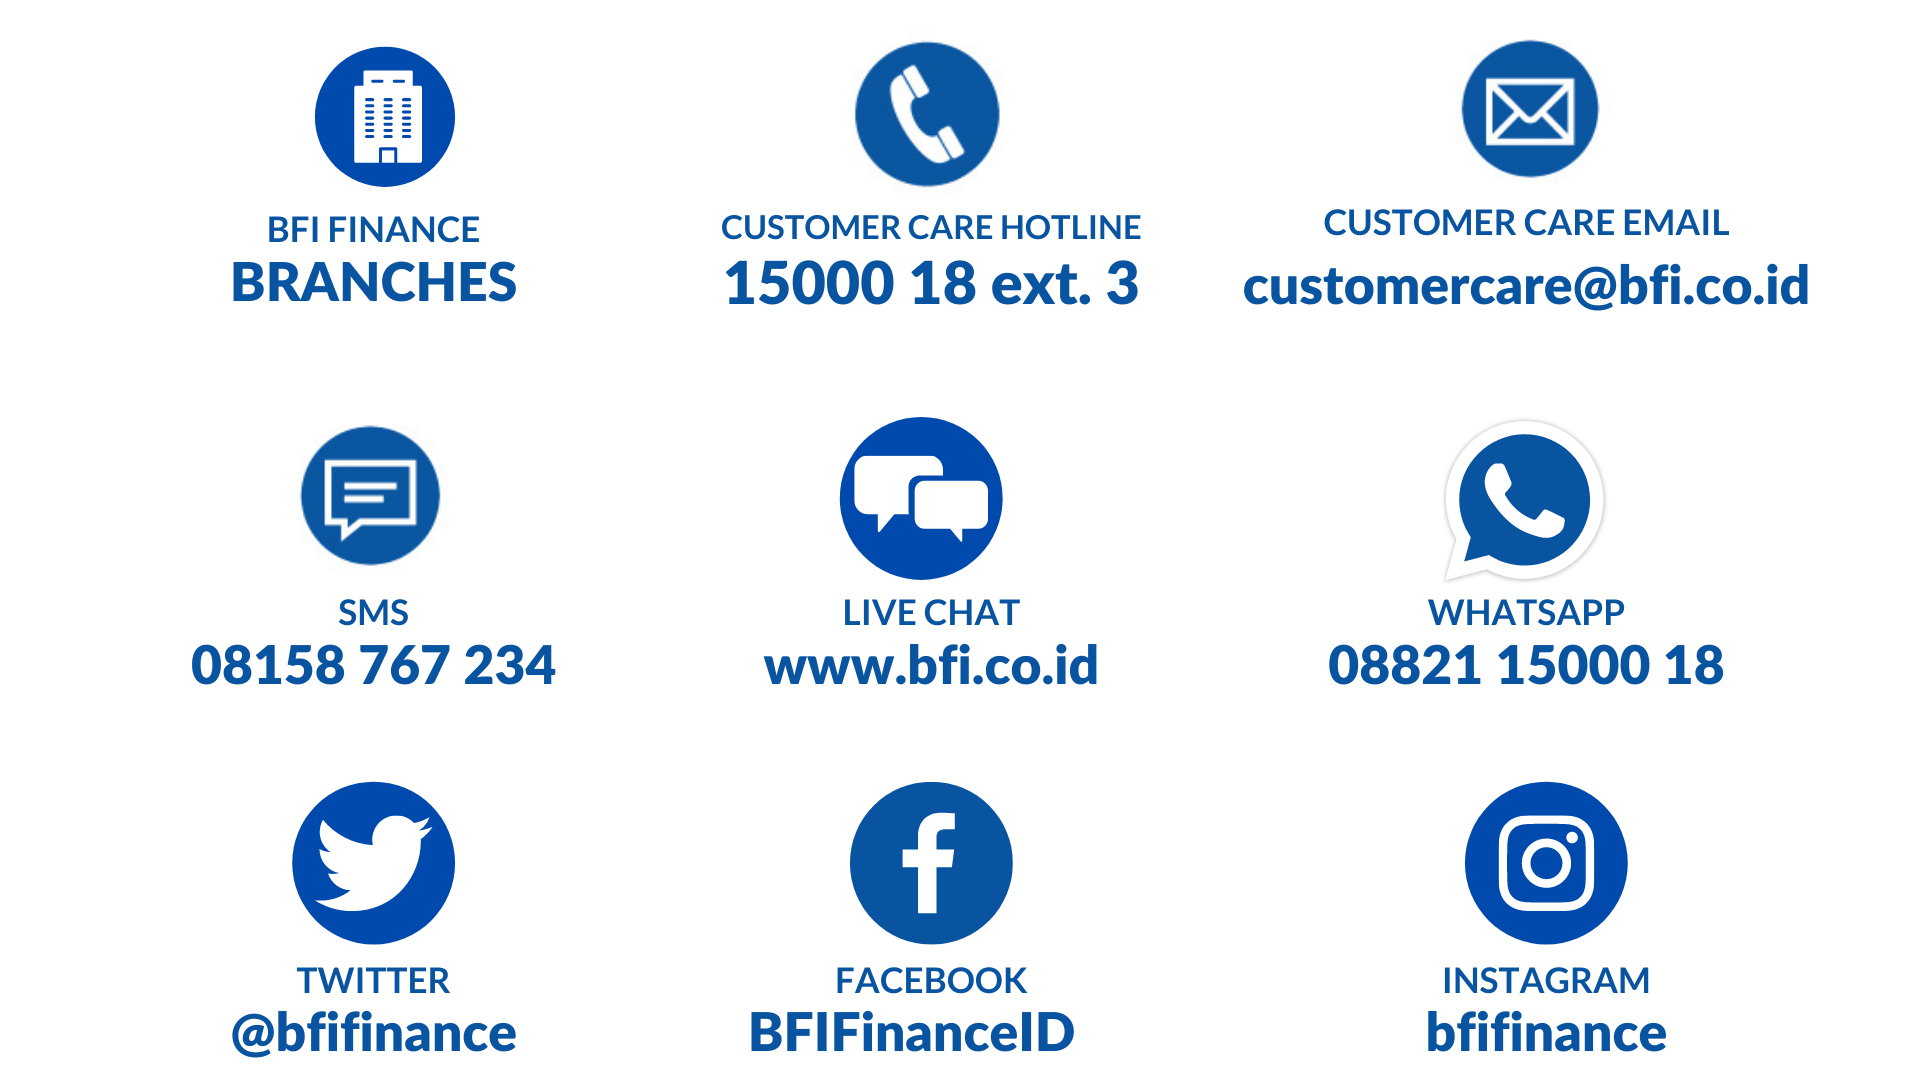 BFI Finance Contact Center